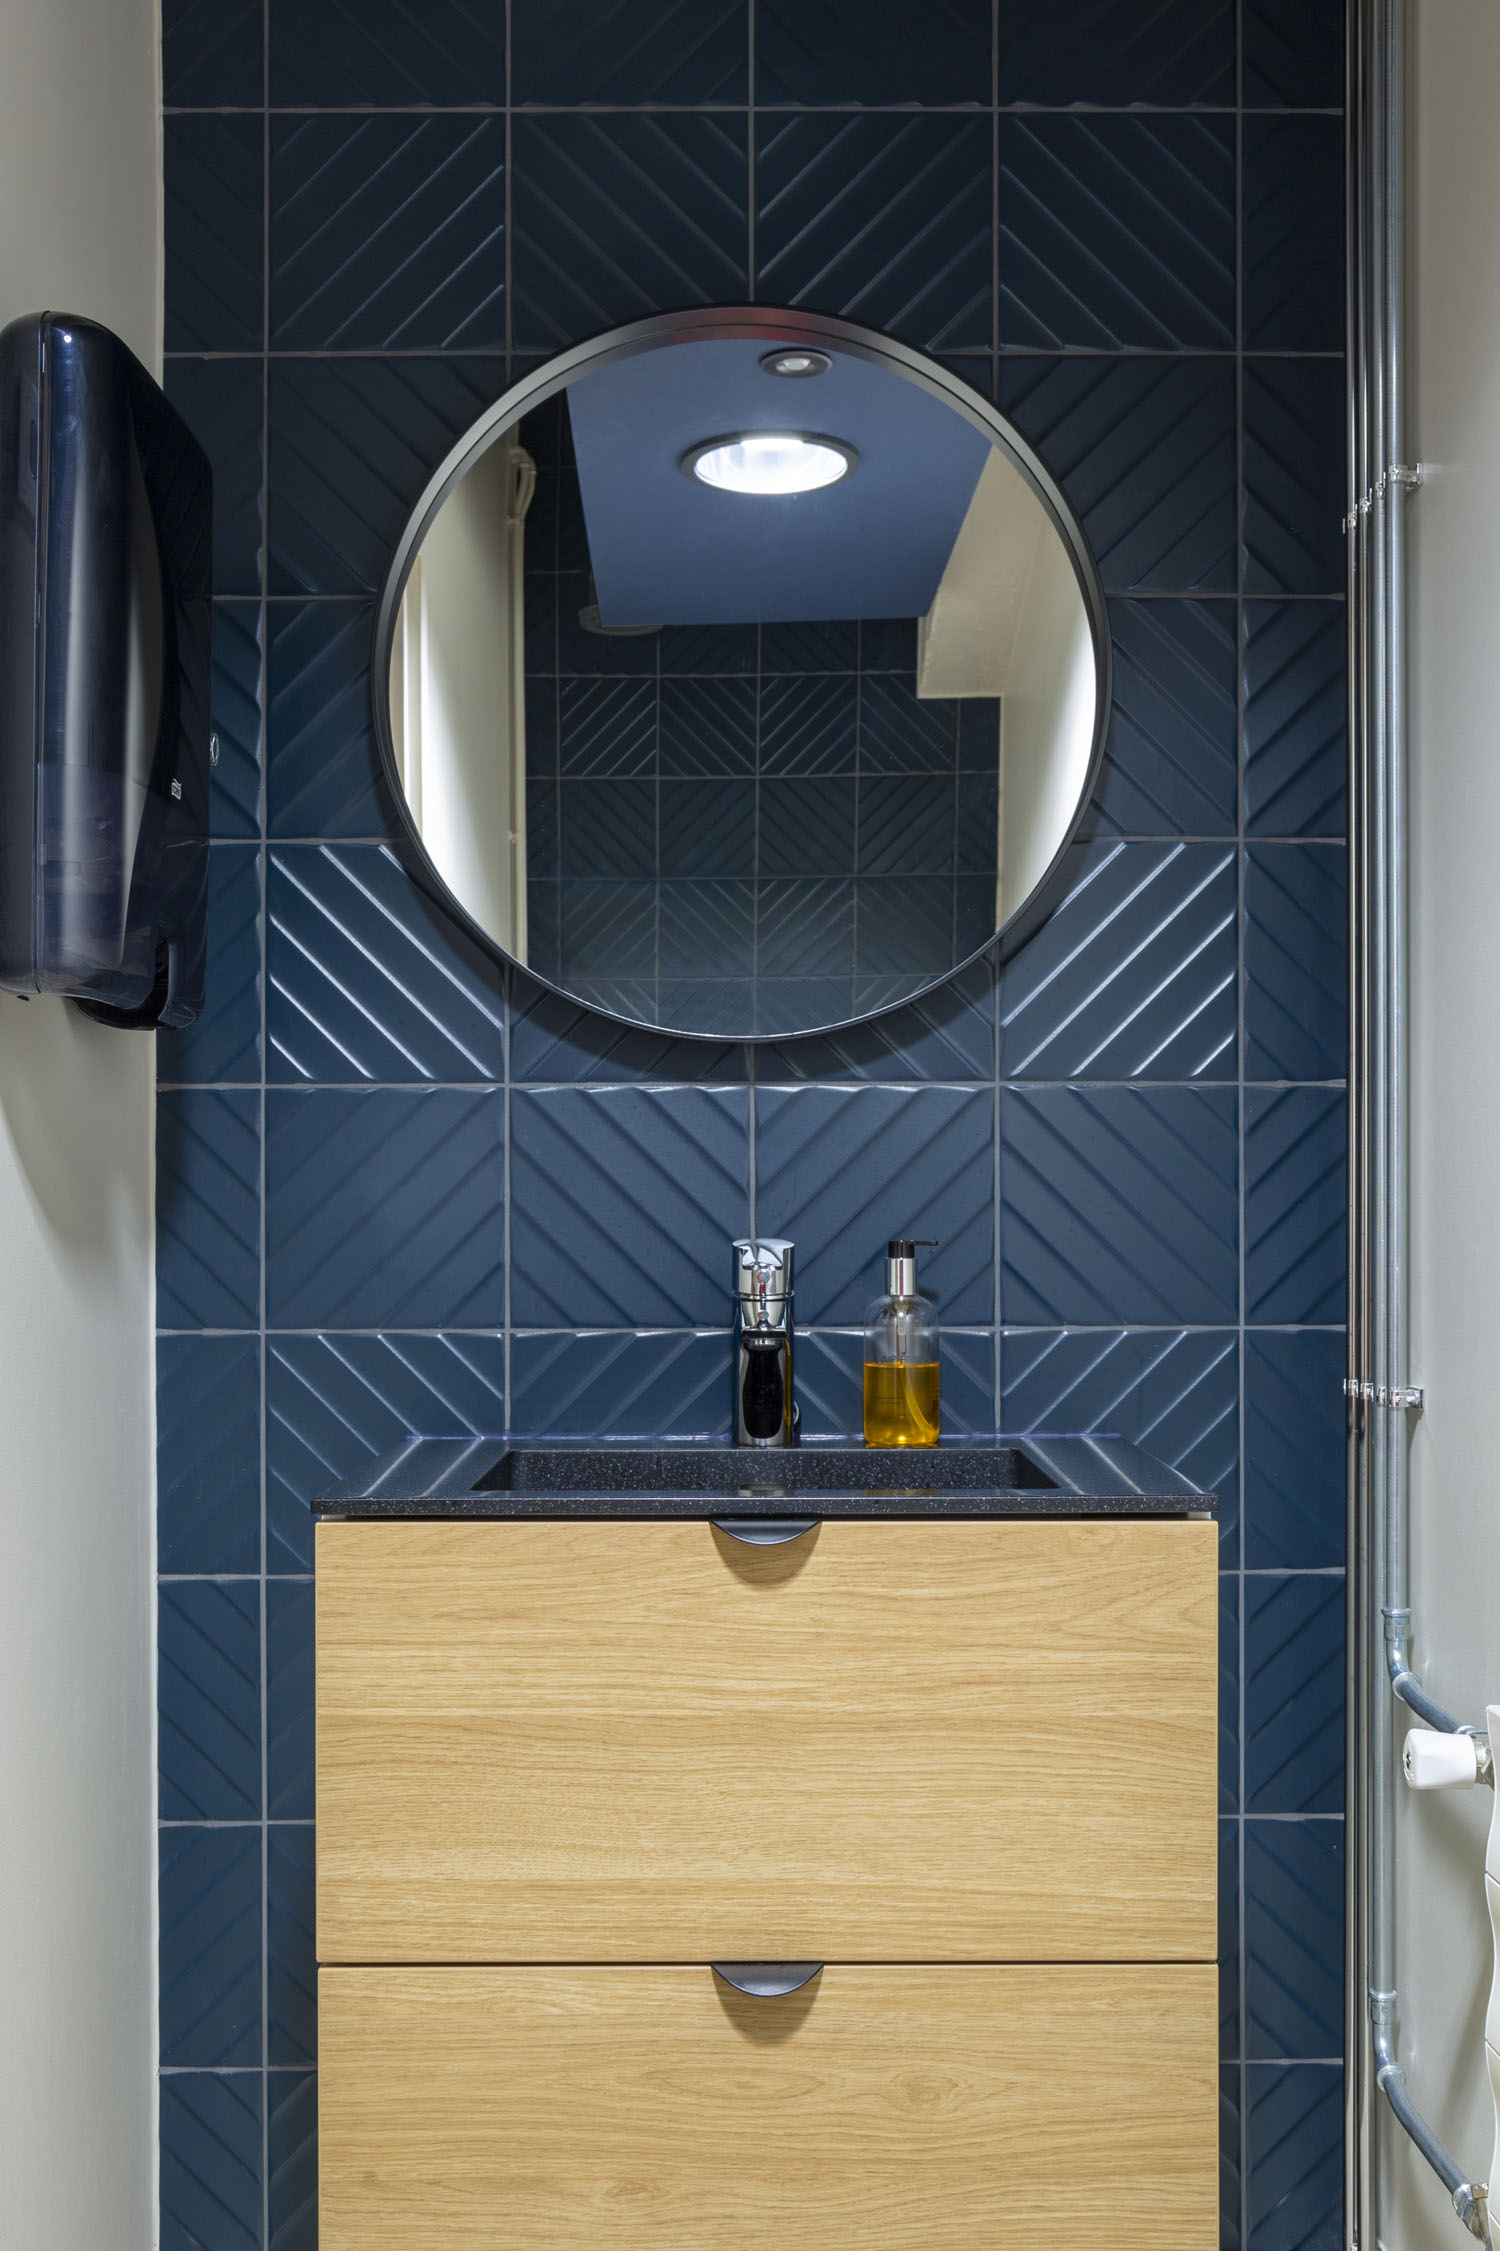 Supermetrics office toilet wc tiles